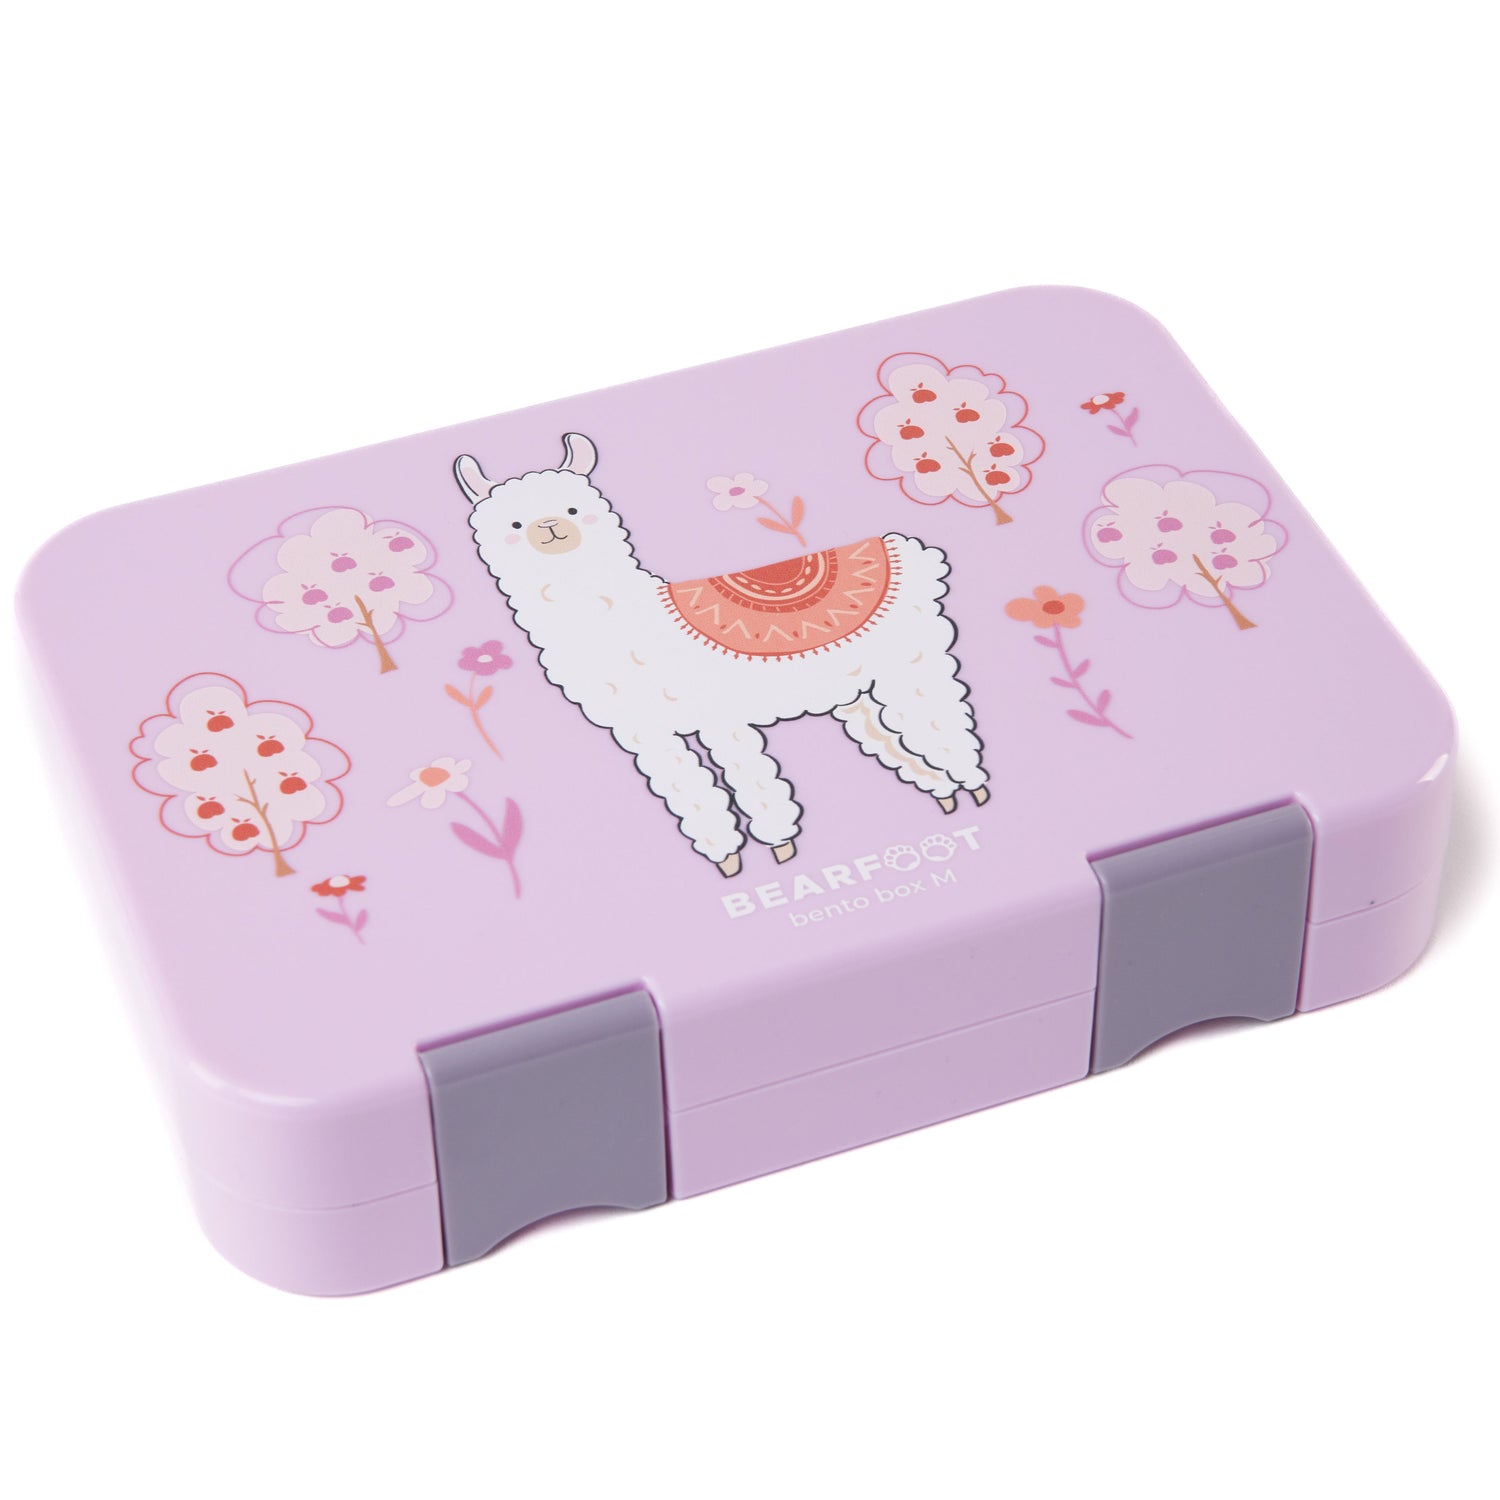 Brotdose Kinder mit Fächern, Lunchbox, Bento box - Lama Lila